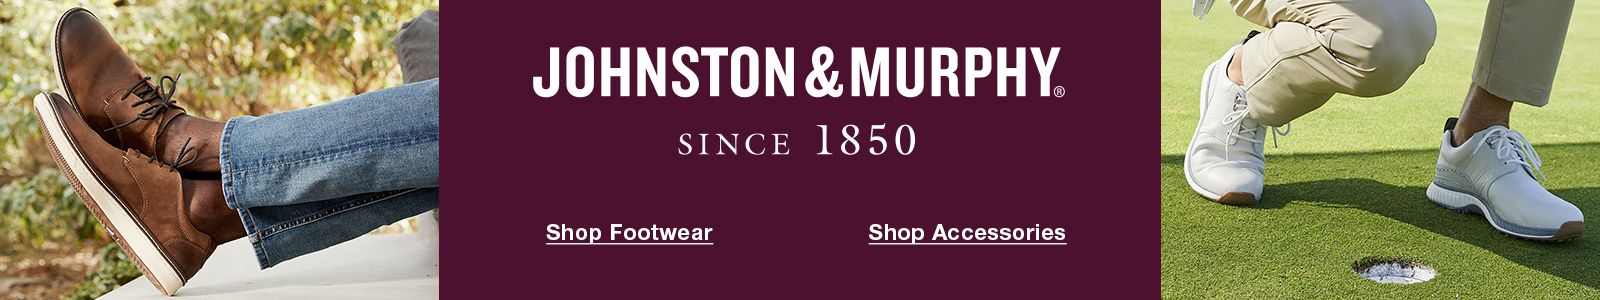 Johnston and Murphy, Since 1850, Shop Footwear, Shop Accessories